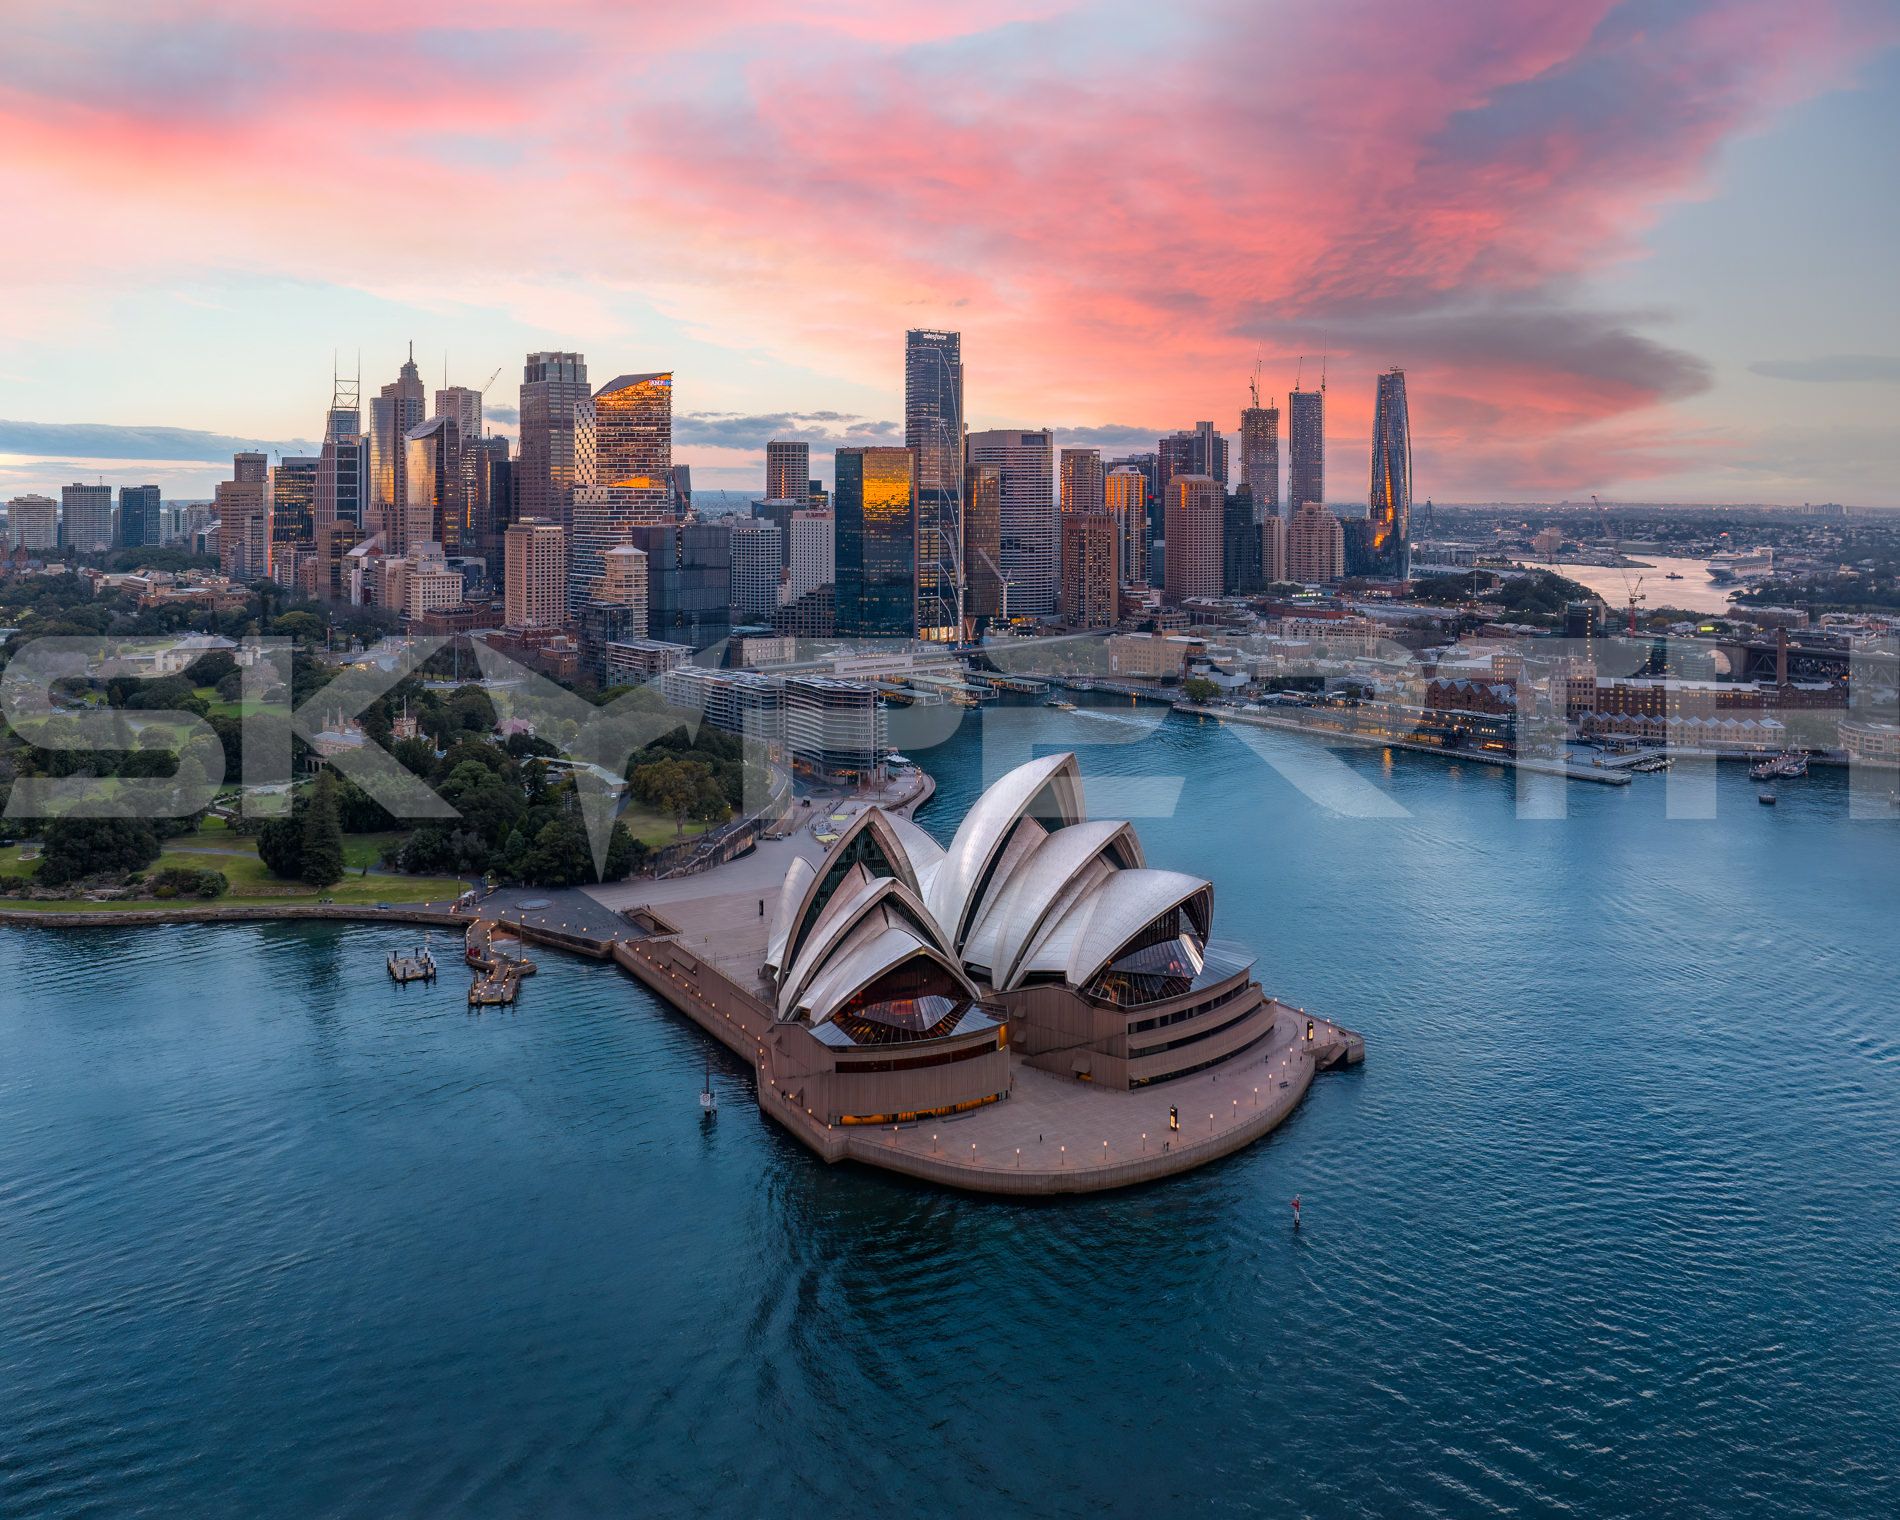 Explore all Sydney photos – capturing the splendor of this vibrant city.